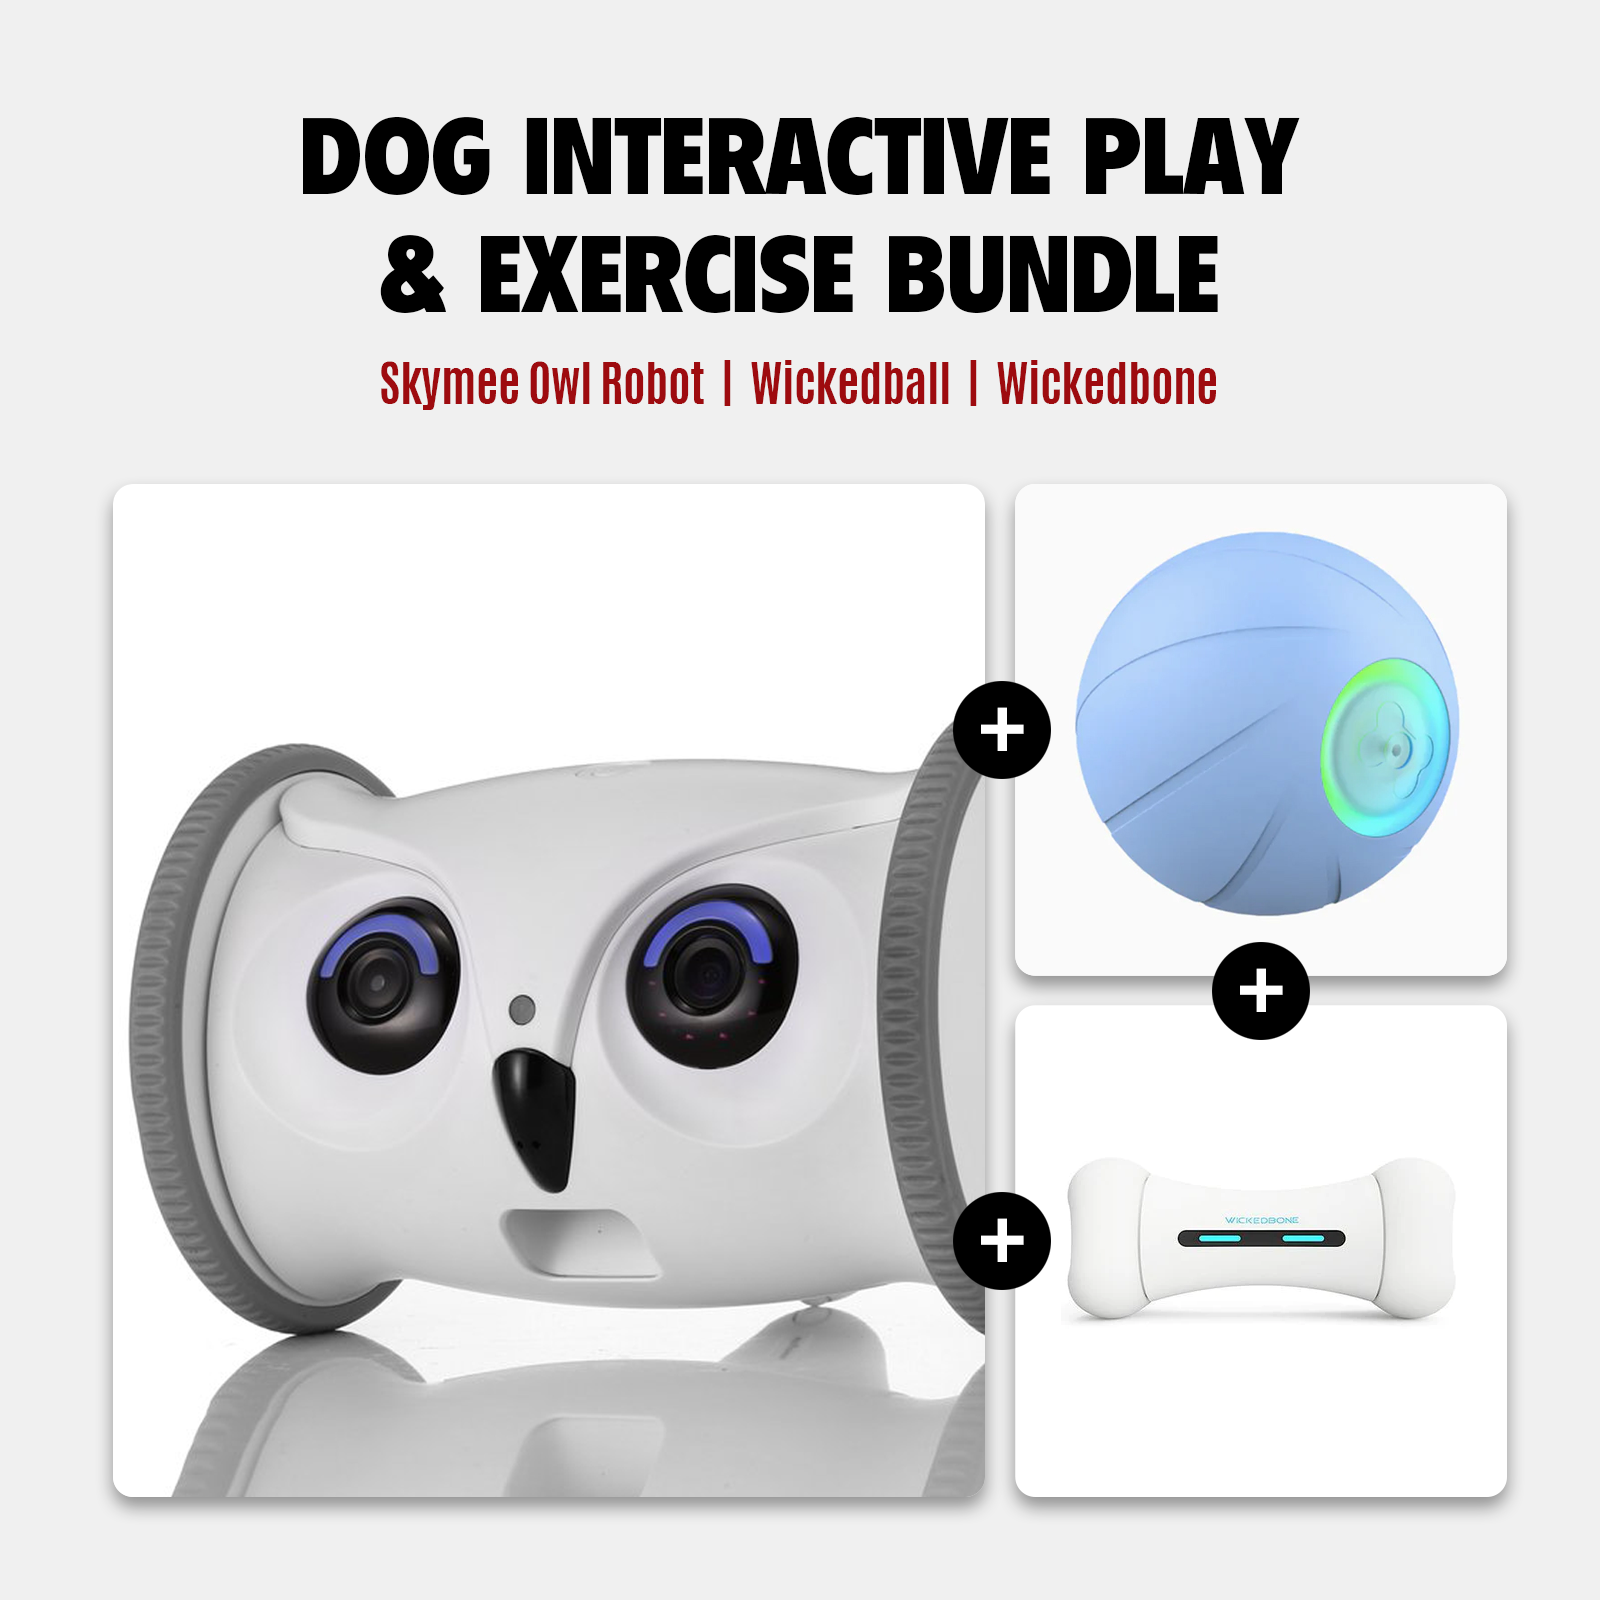 Dog Interactive Play & Exercise Bundle